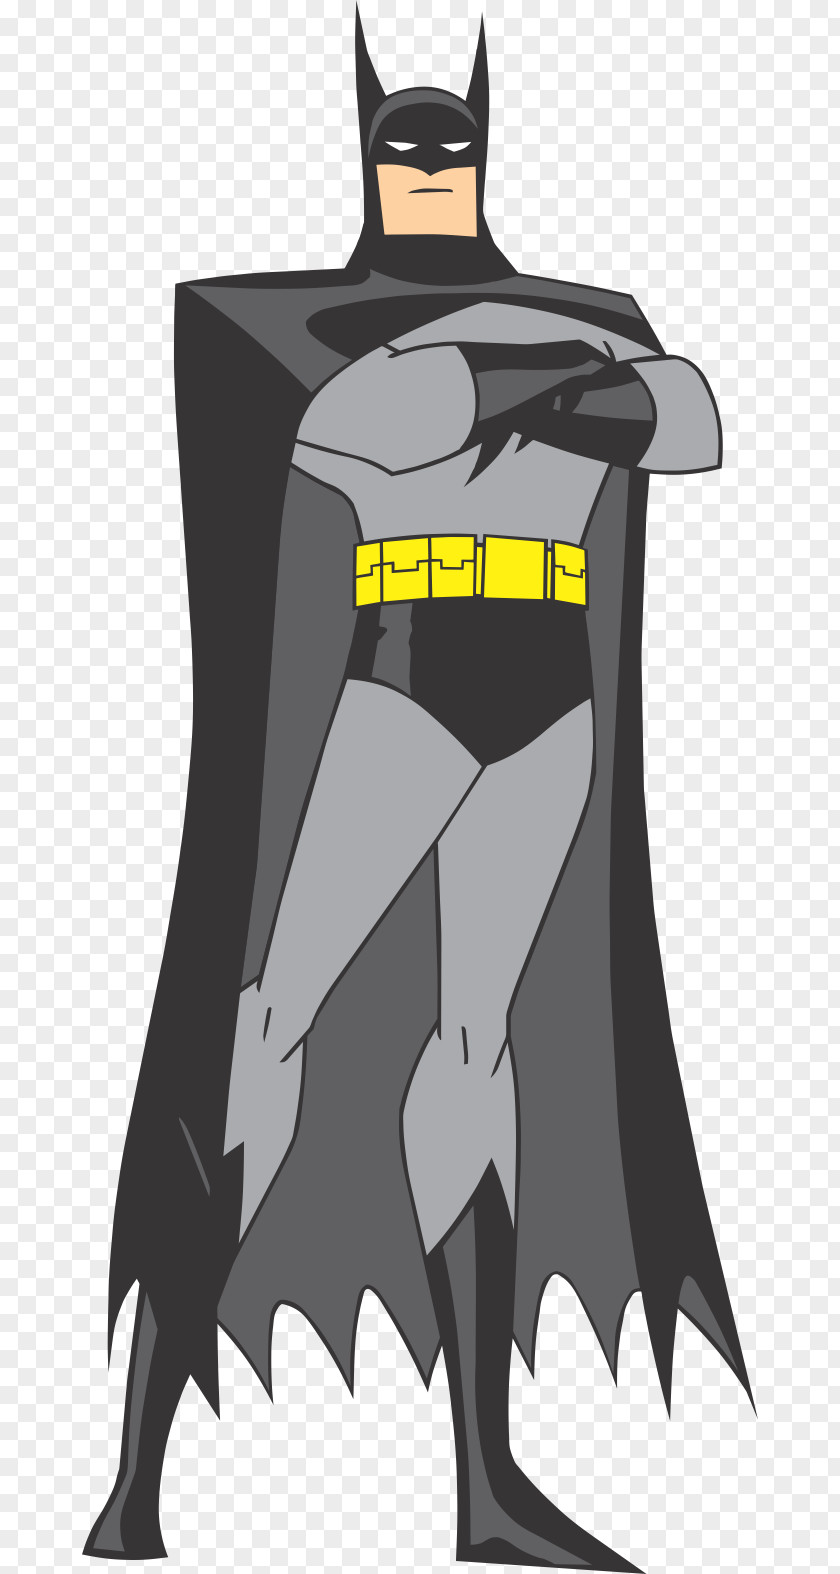 Batman Superman Drawing Superhero Image PNG